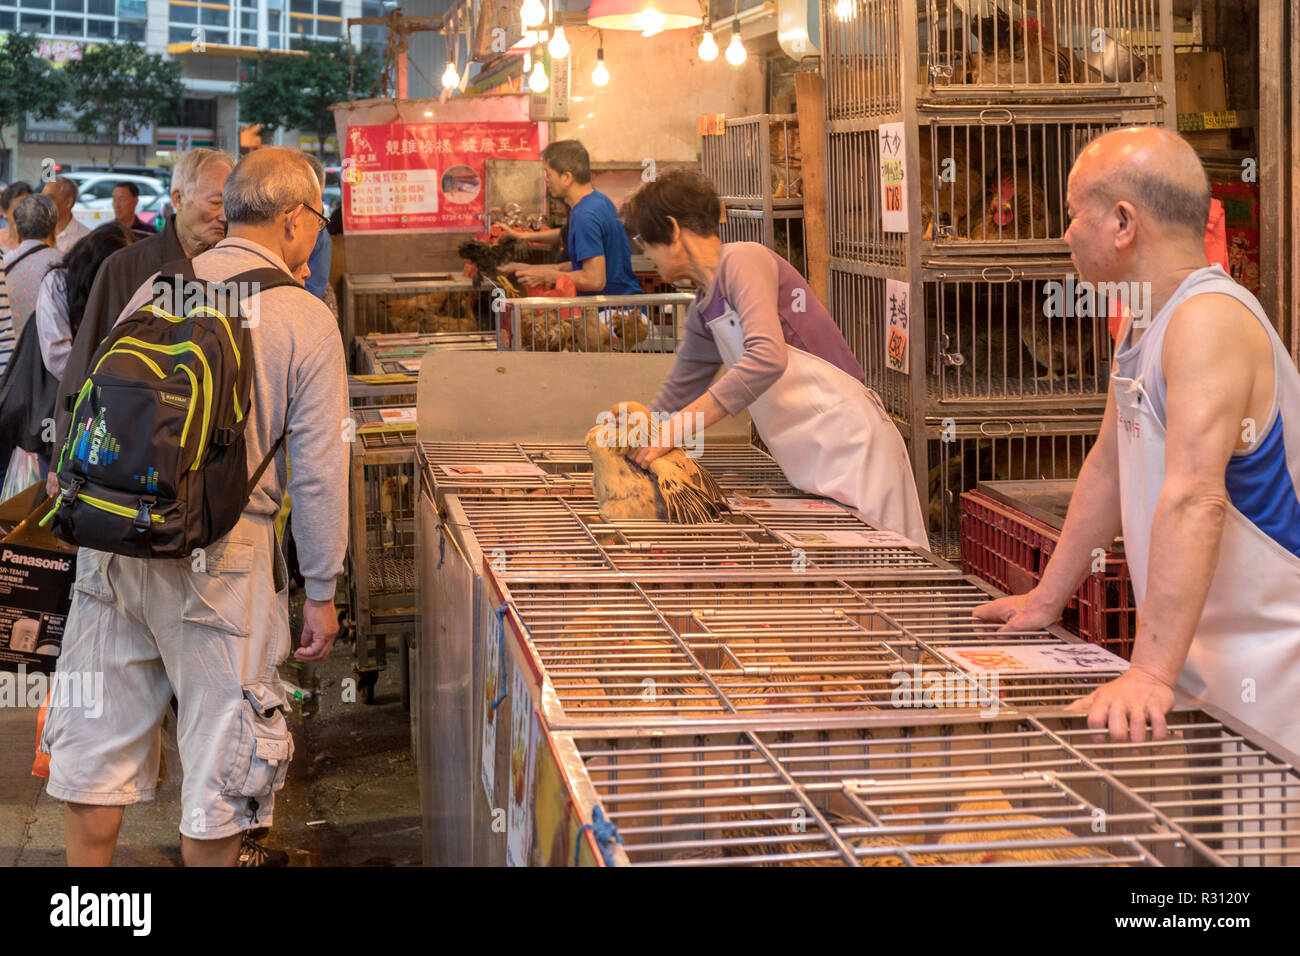 KOWLOON, HONG KONG - APRIL 22, 2017: Live Chicken Sellers at Poultry Shop at Local Market in Kowloon, Hong Kong. Stock Photo